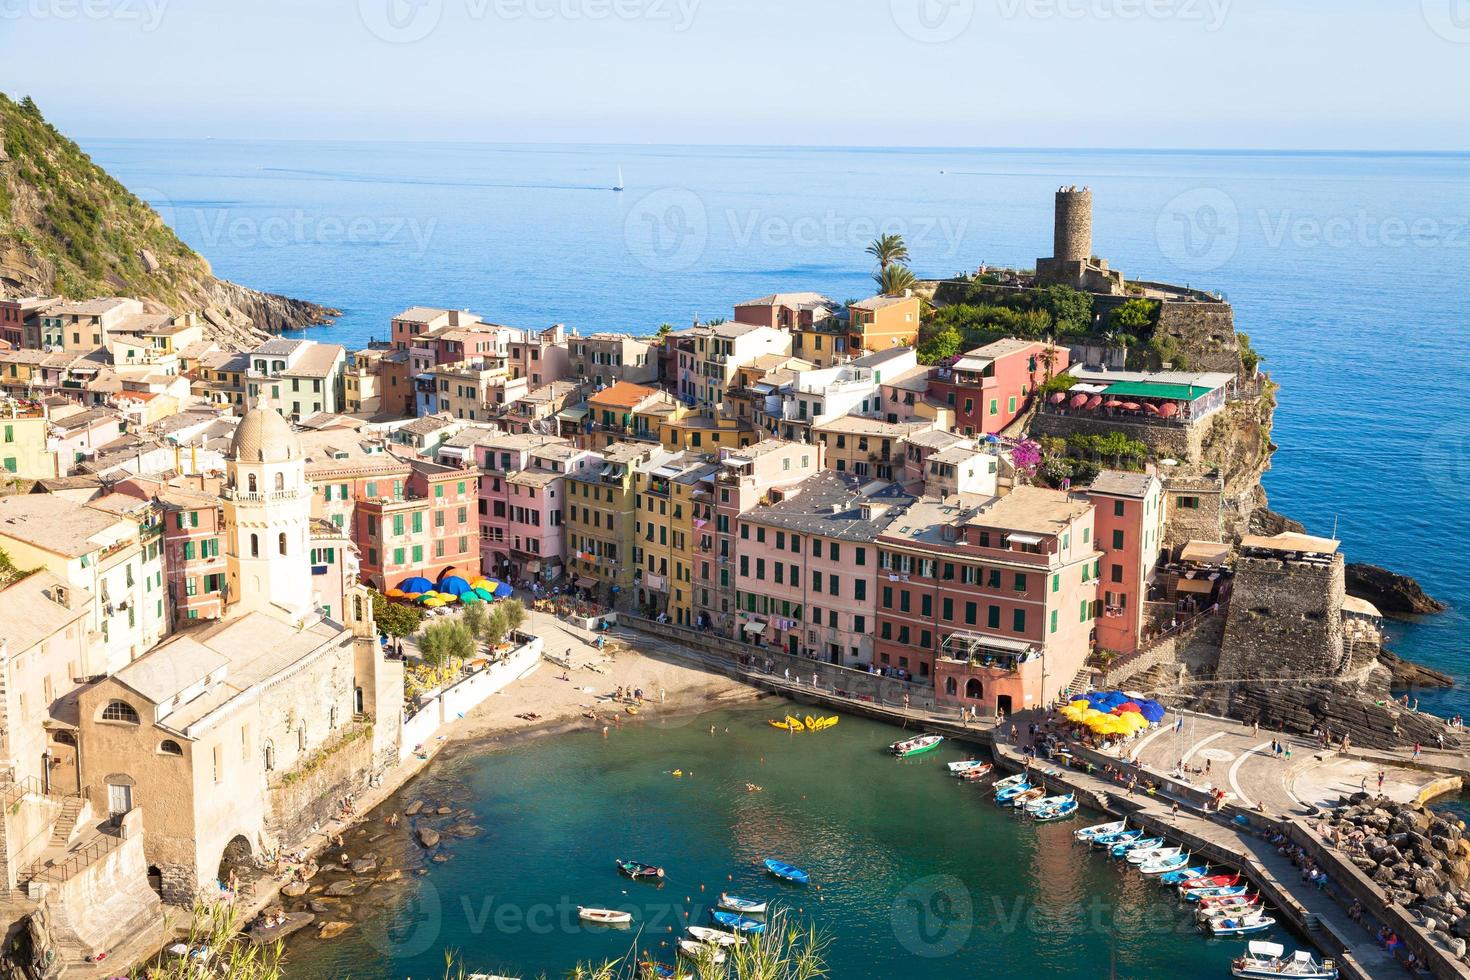 vernazza i Cinque Terre, Italien - sommaren 2016 - utsikt från kullen foto